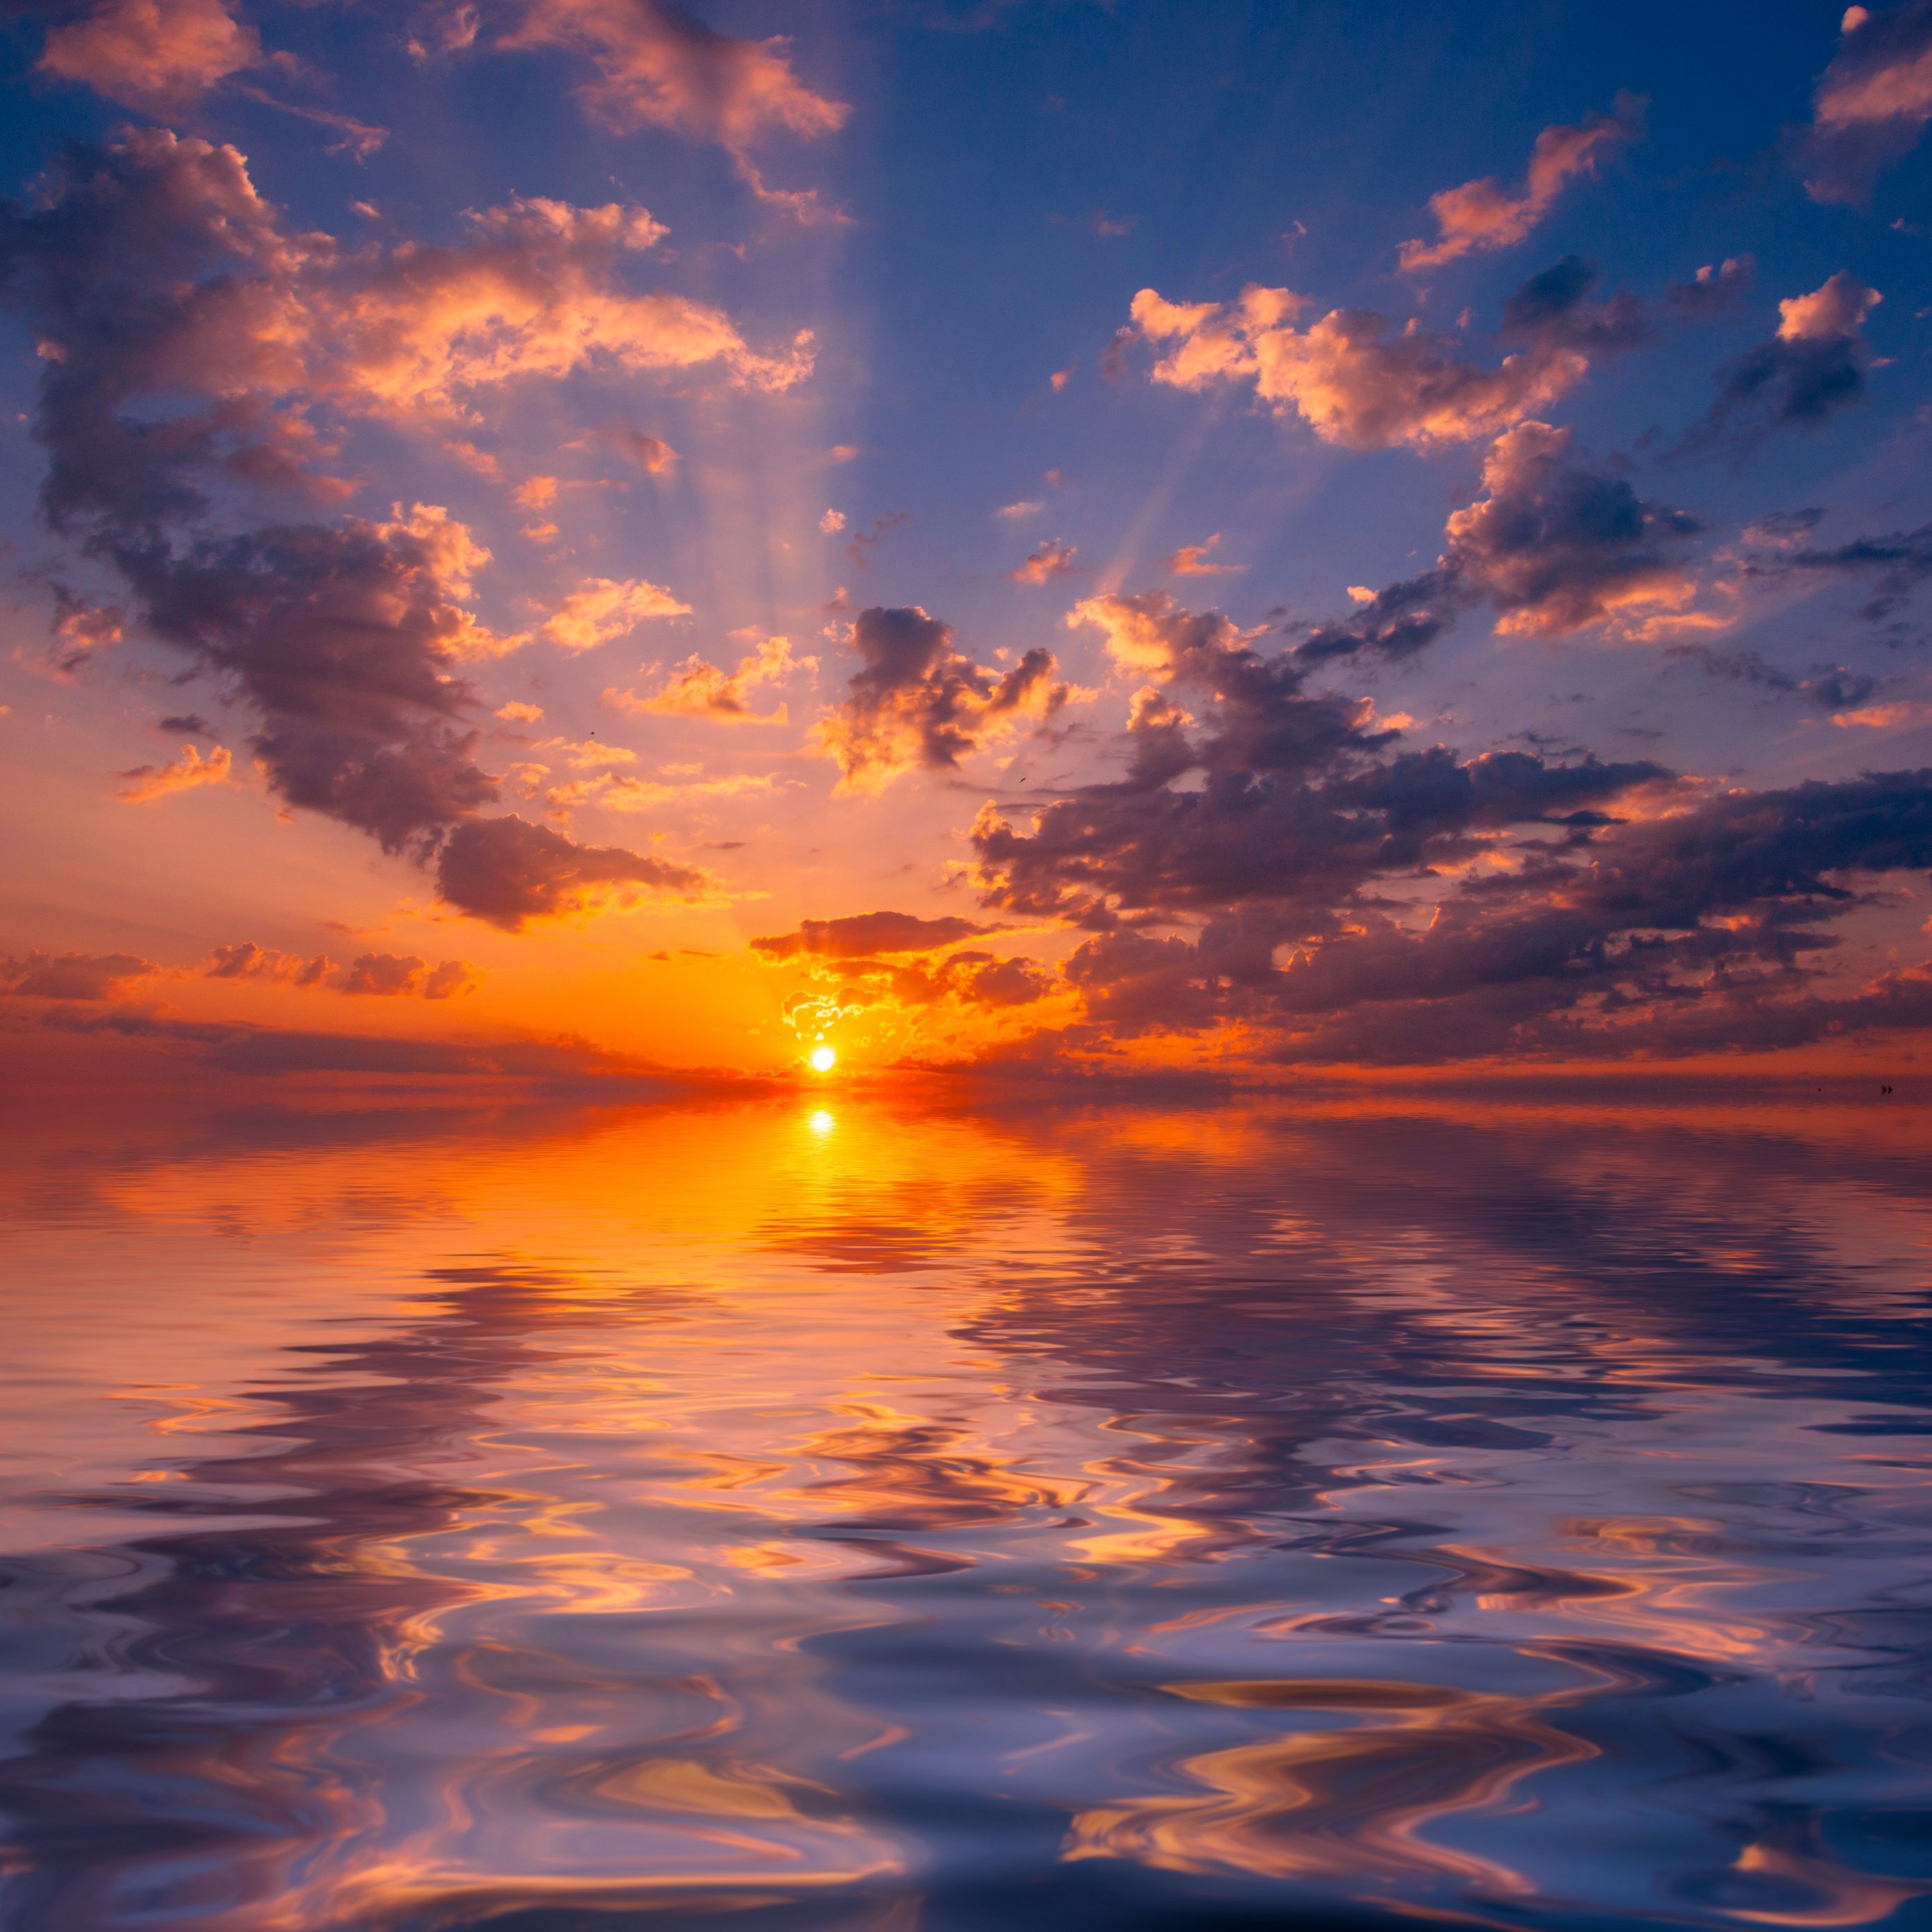 Download Wallpaper 2780x2780 Sea Sunset Horizon Sun Reflection